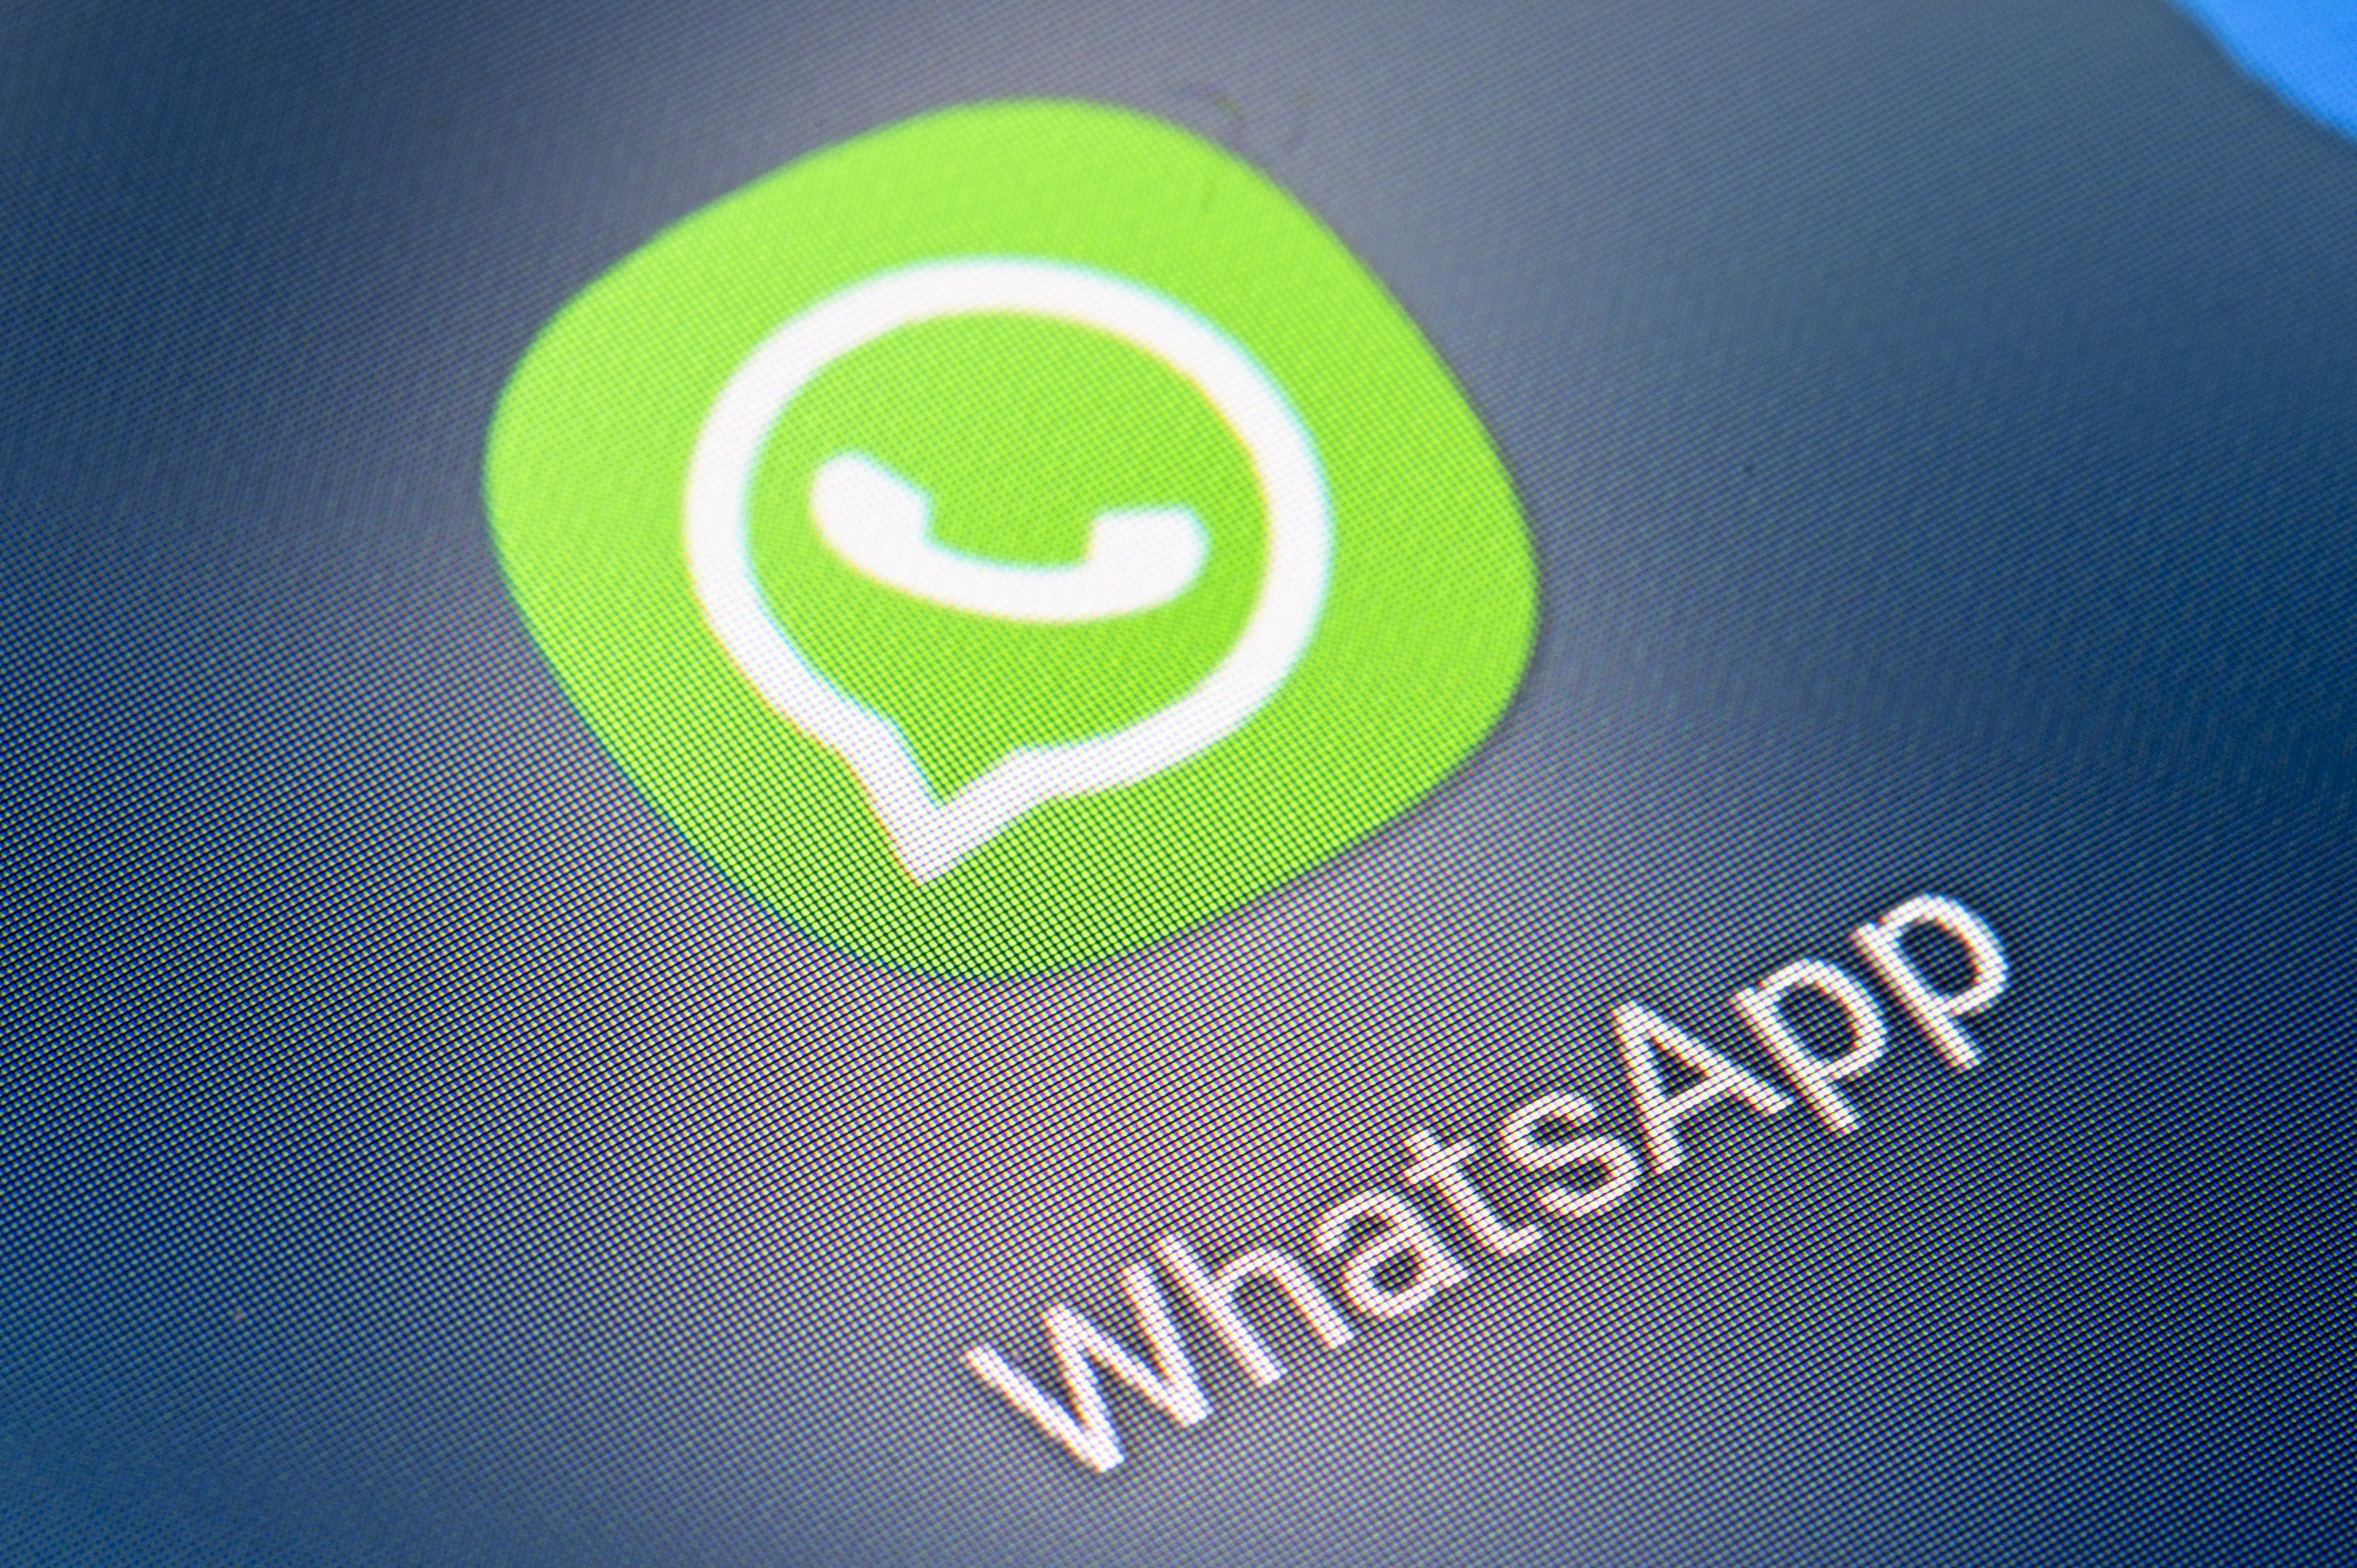 Nova caiguda de WhatsApp mundial